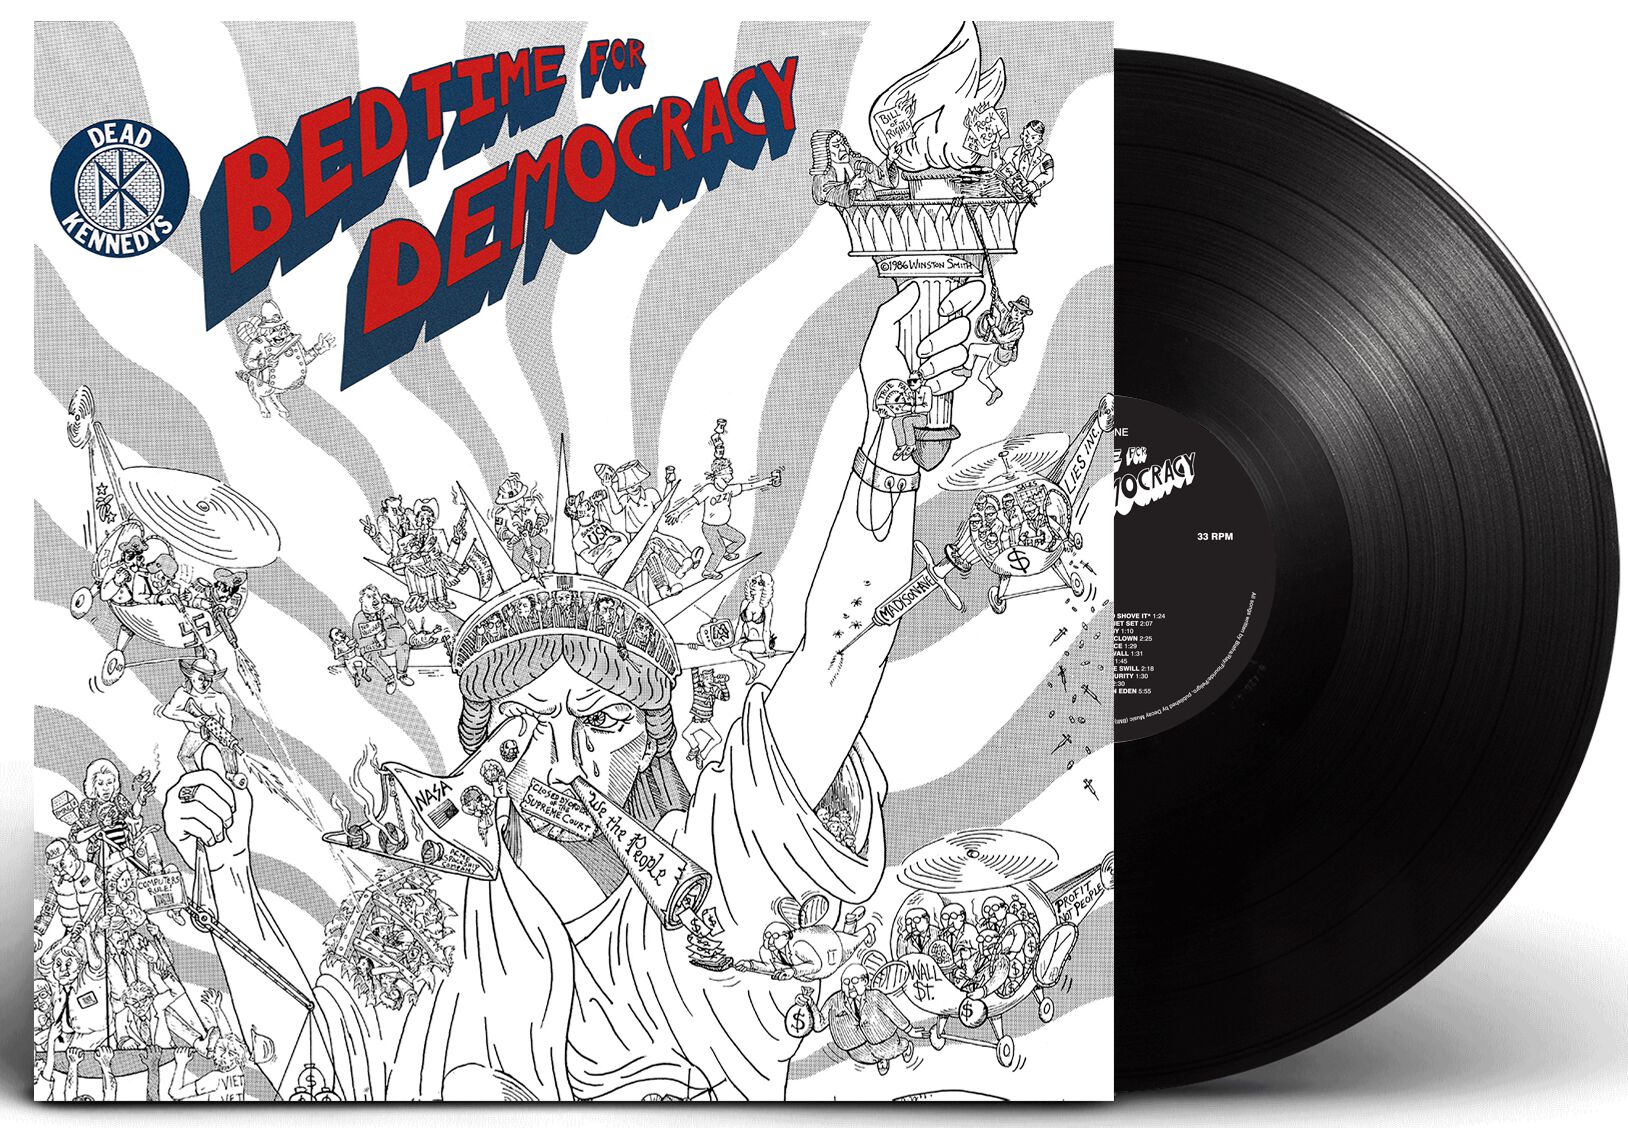 Bedtime for democracy von Dead Kennedys - LP (Limited Edition, Re-Issue) von Dead Kennedys